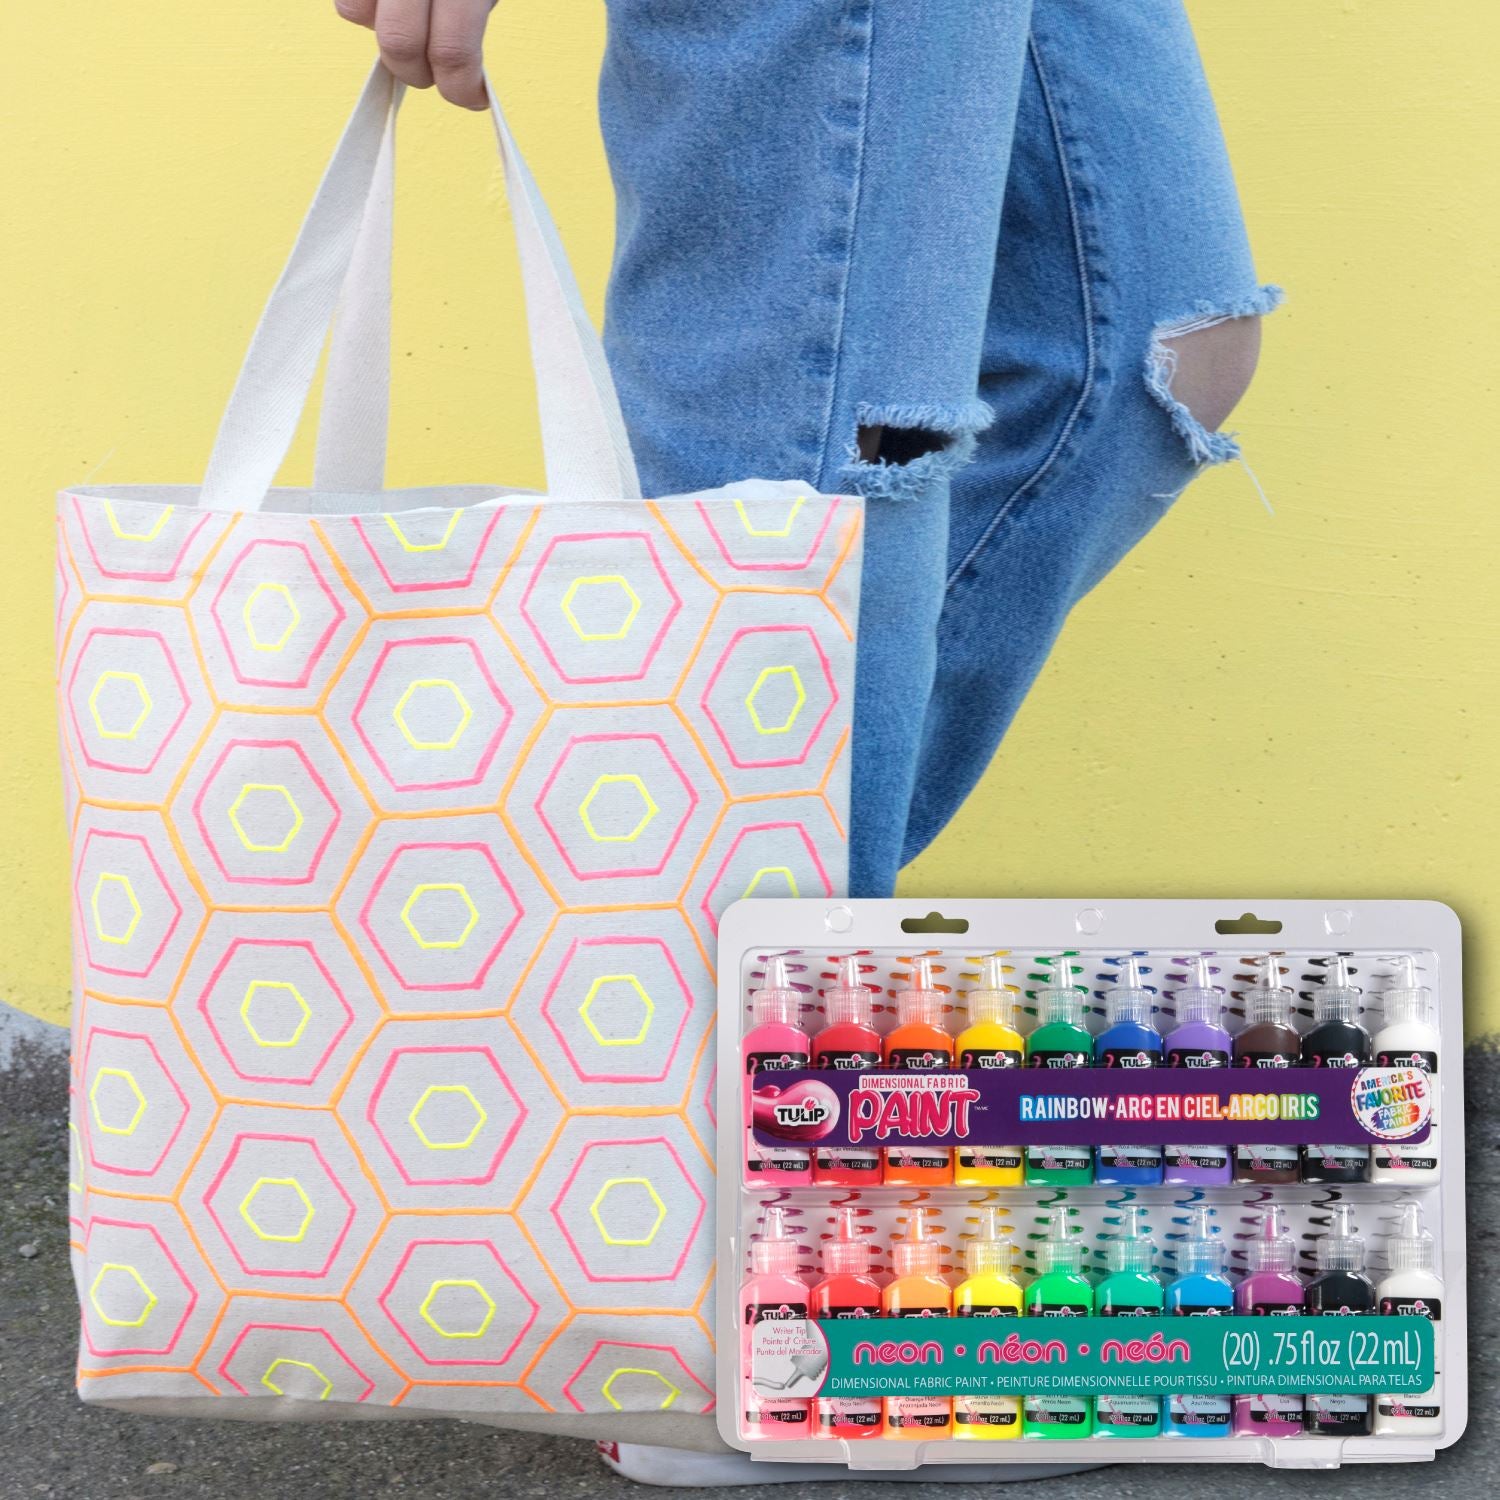 Tulip Dimensional Fabric Paint Rainbow & Neon .75 fl oz 20 Pack - 6